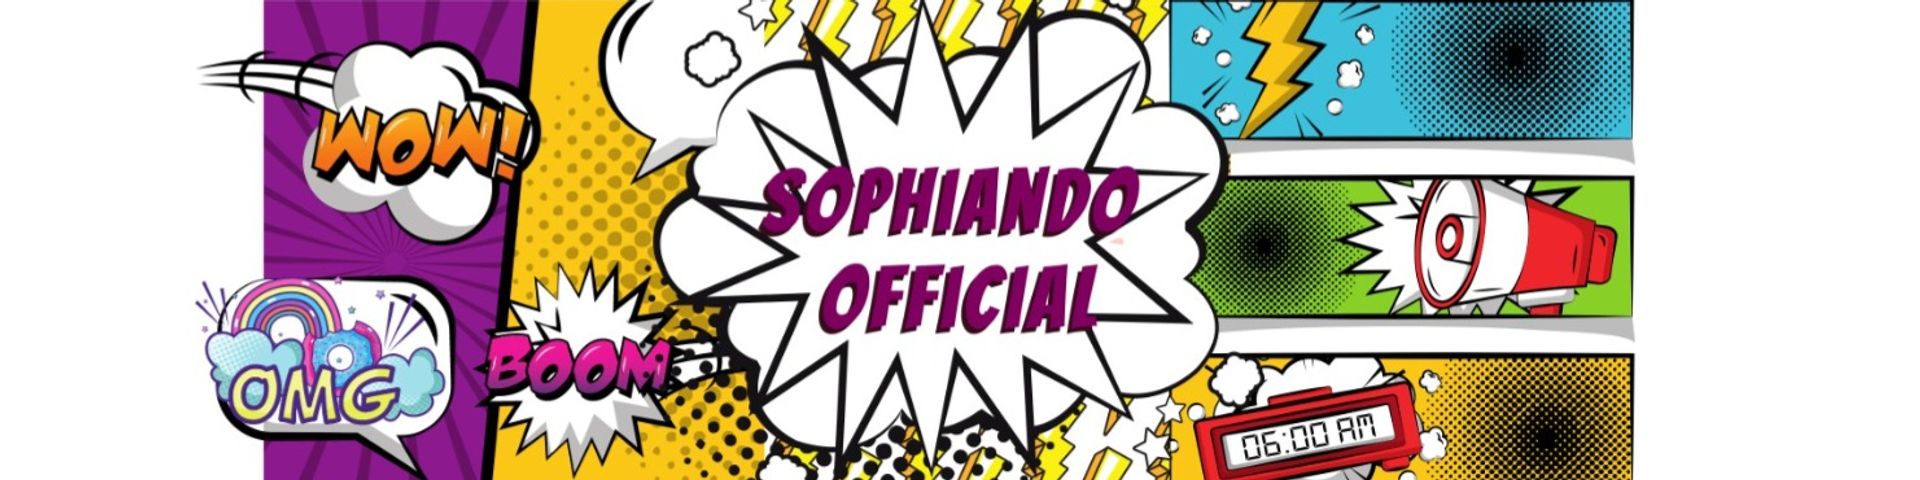 Nome da loja  Sophiando Official